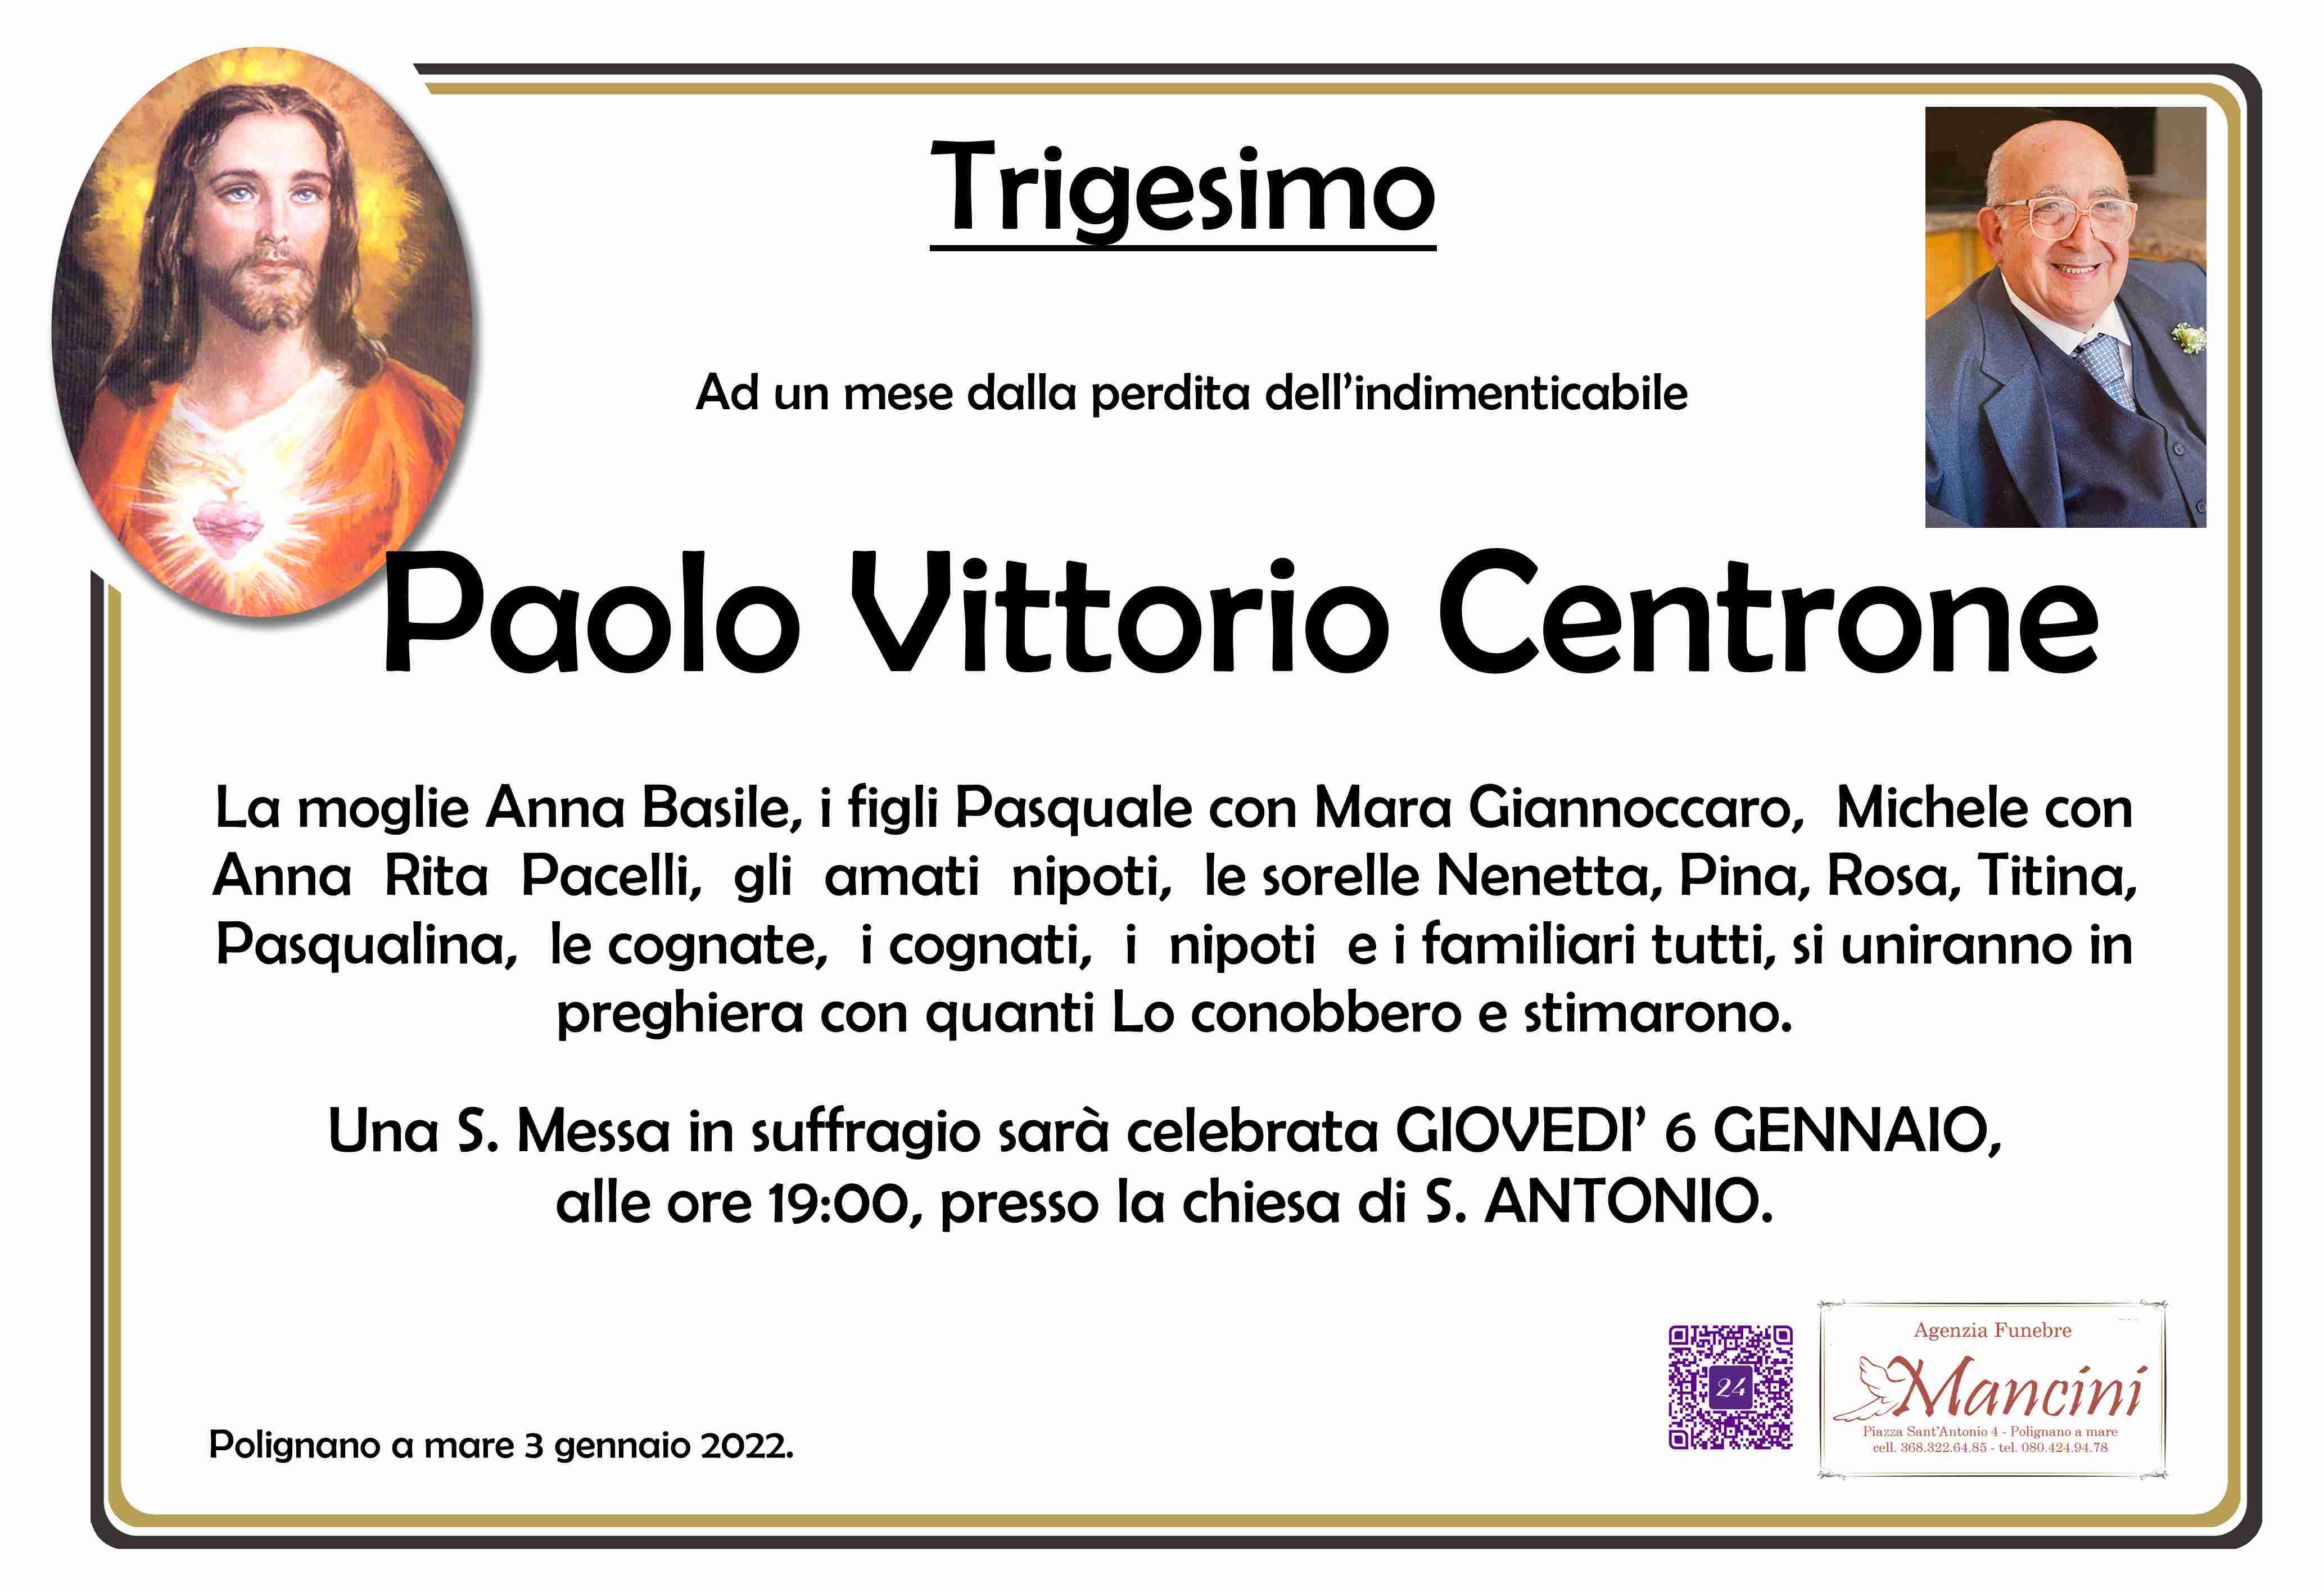 Paolo Vittorio Centrone